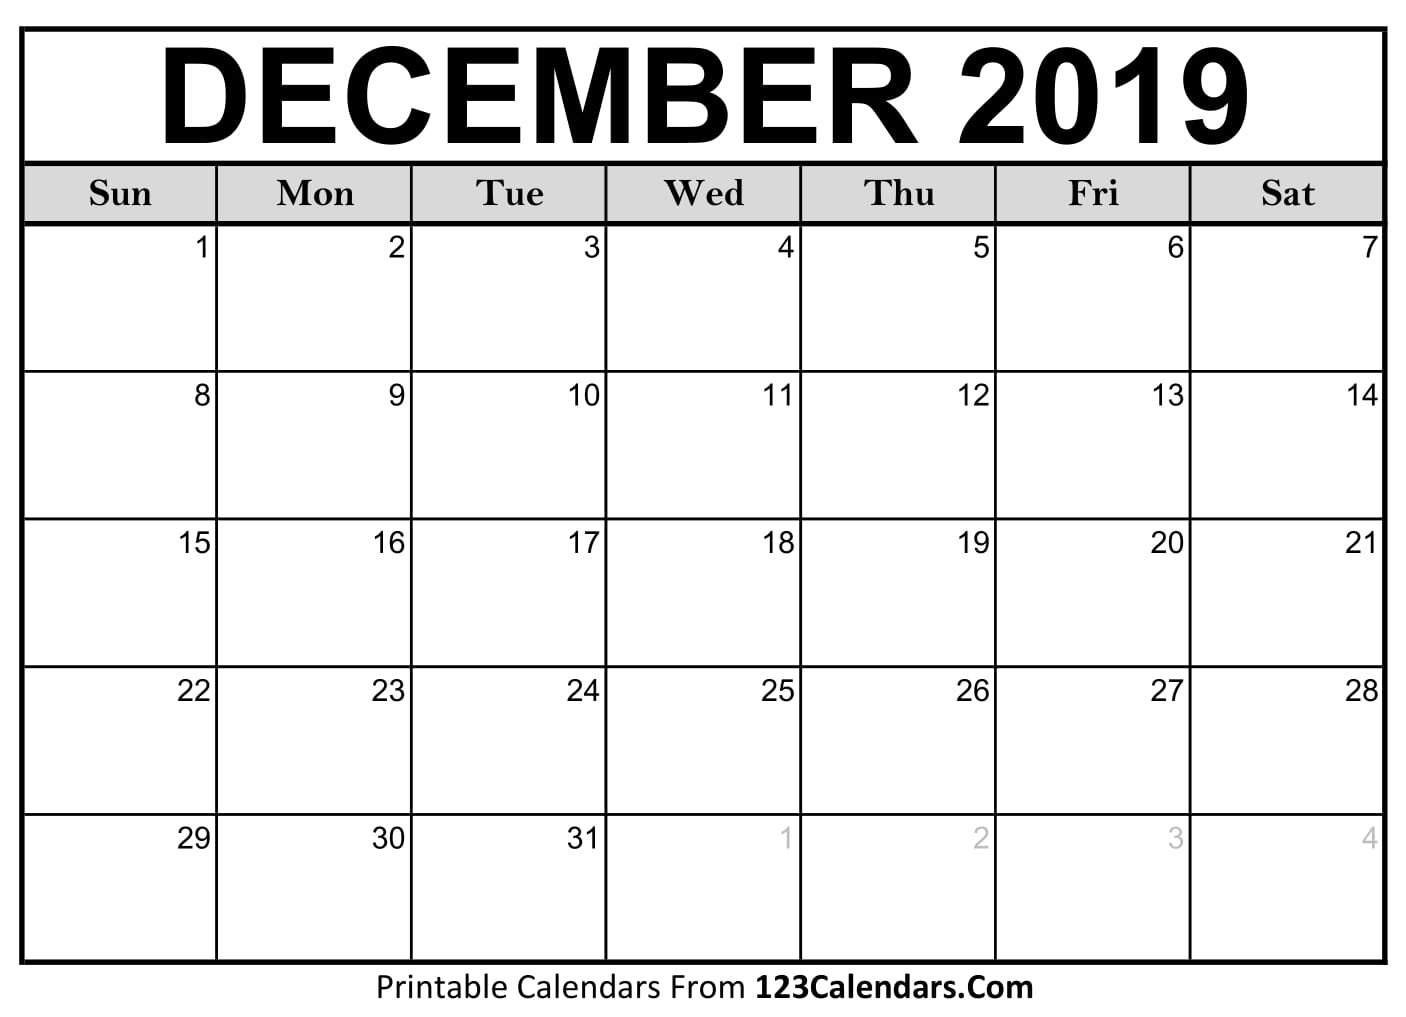 December 2019 Printable Calendar | 123Calendars